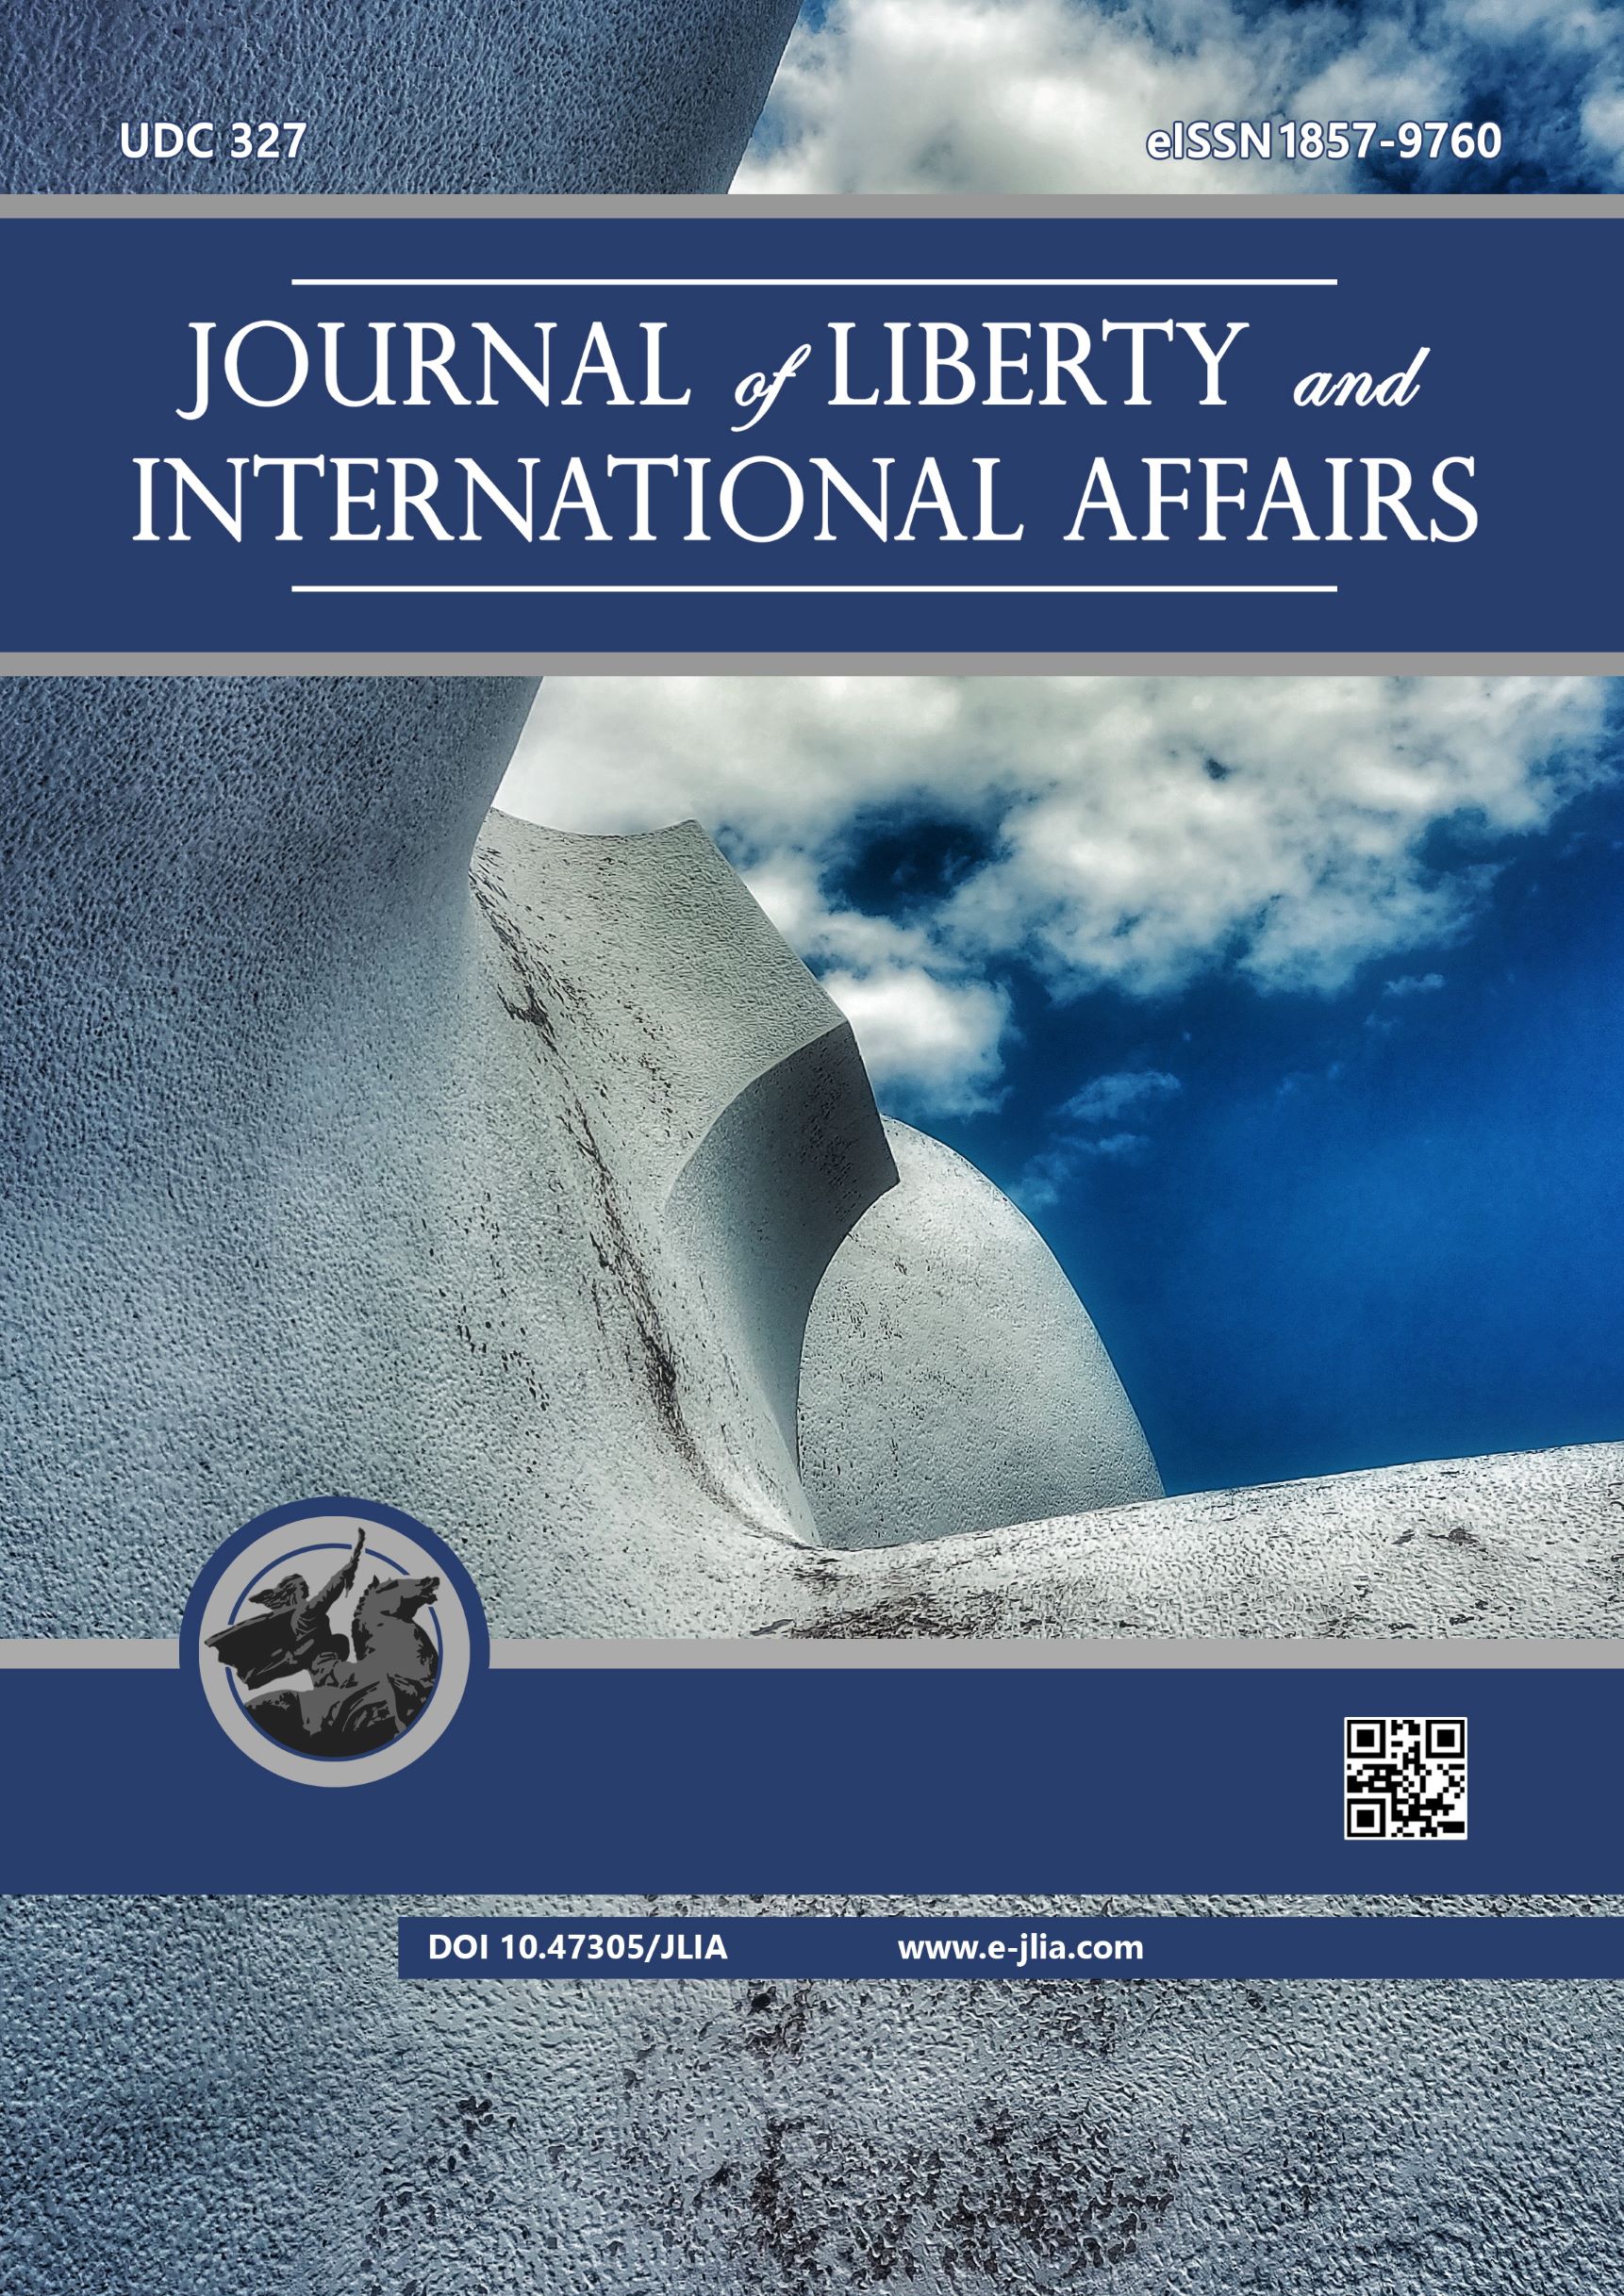 Le Journal International - Archives